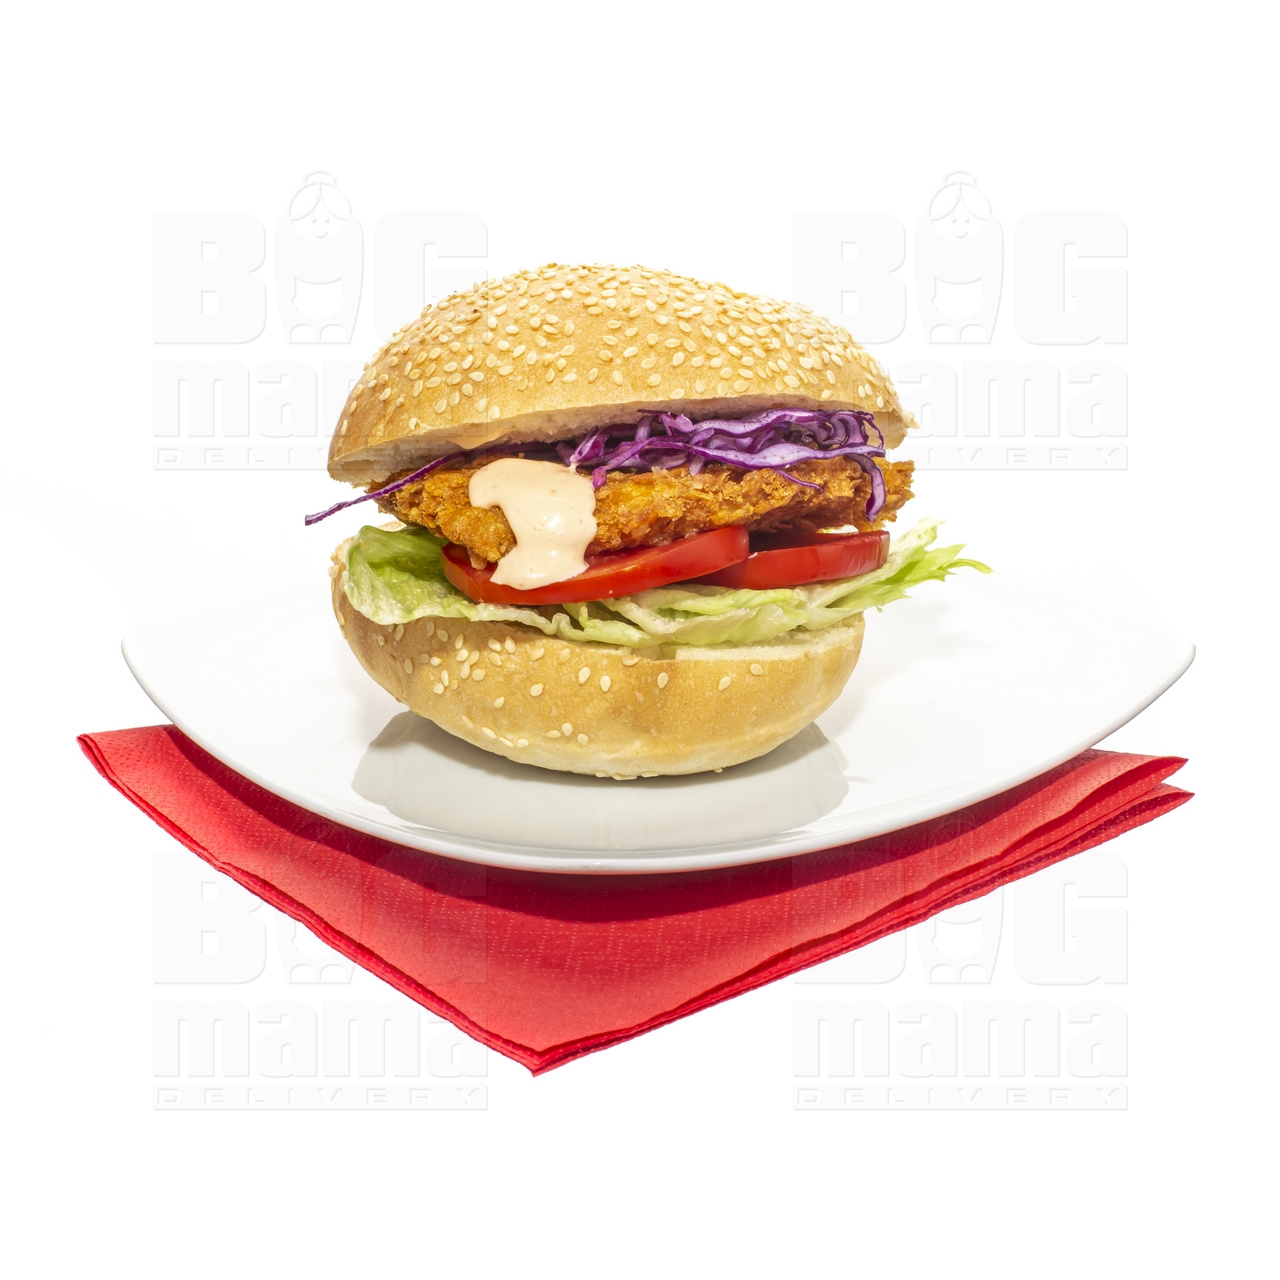 Product #215 image - Big  crispy sandwich